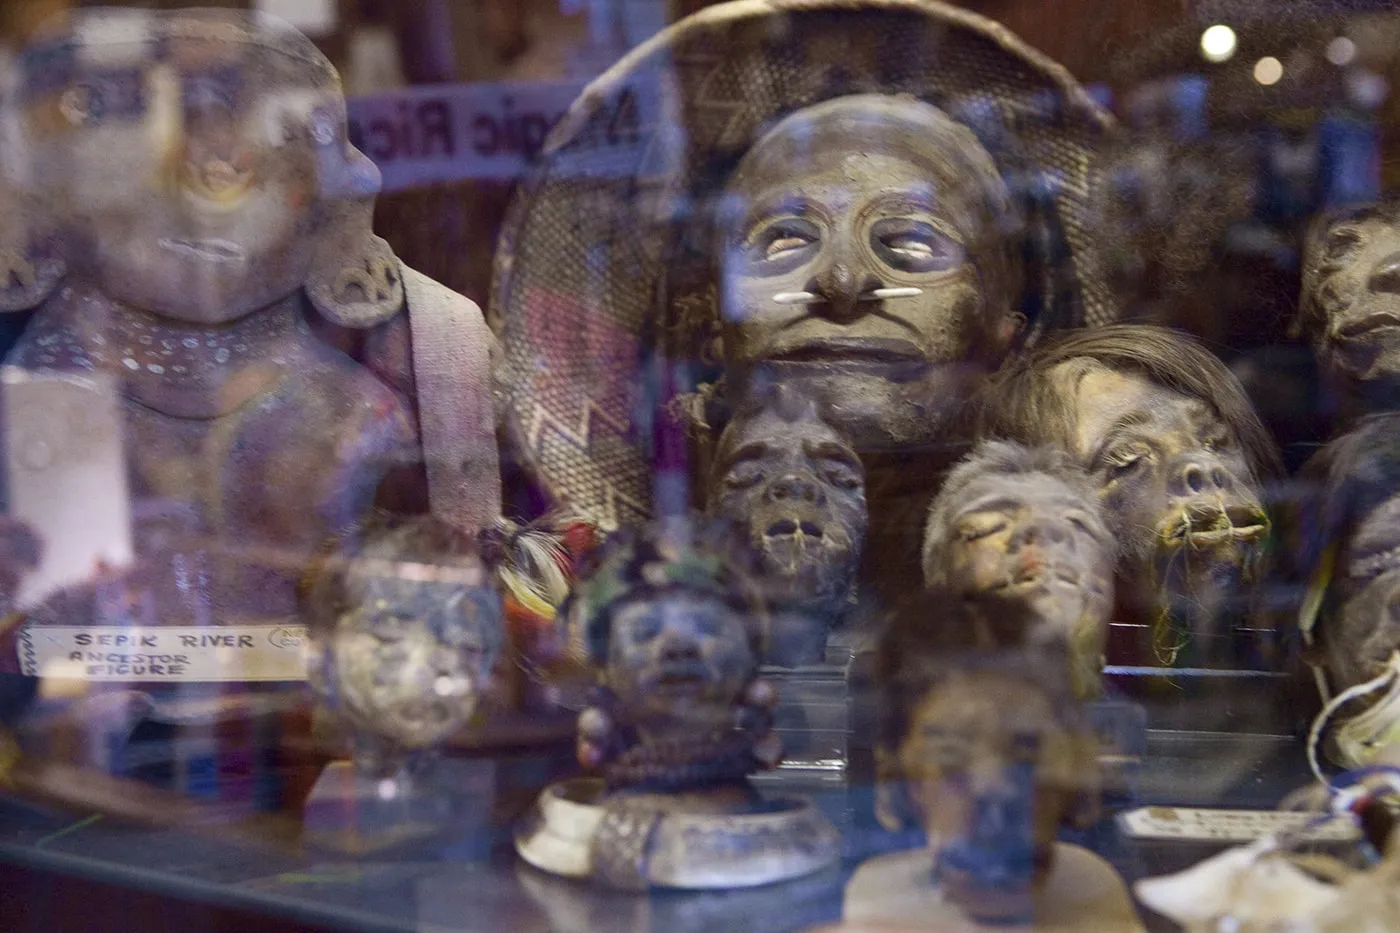 Shrunken heads at Ye Olde Curiosity Shoppe in Seattle, Washington